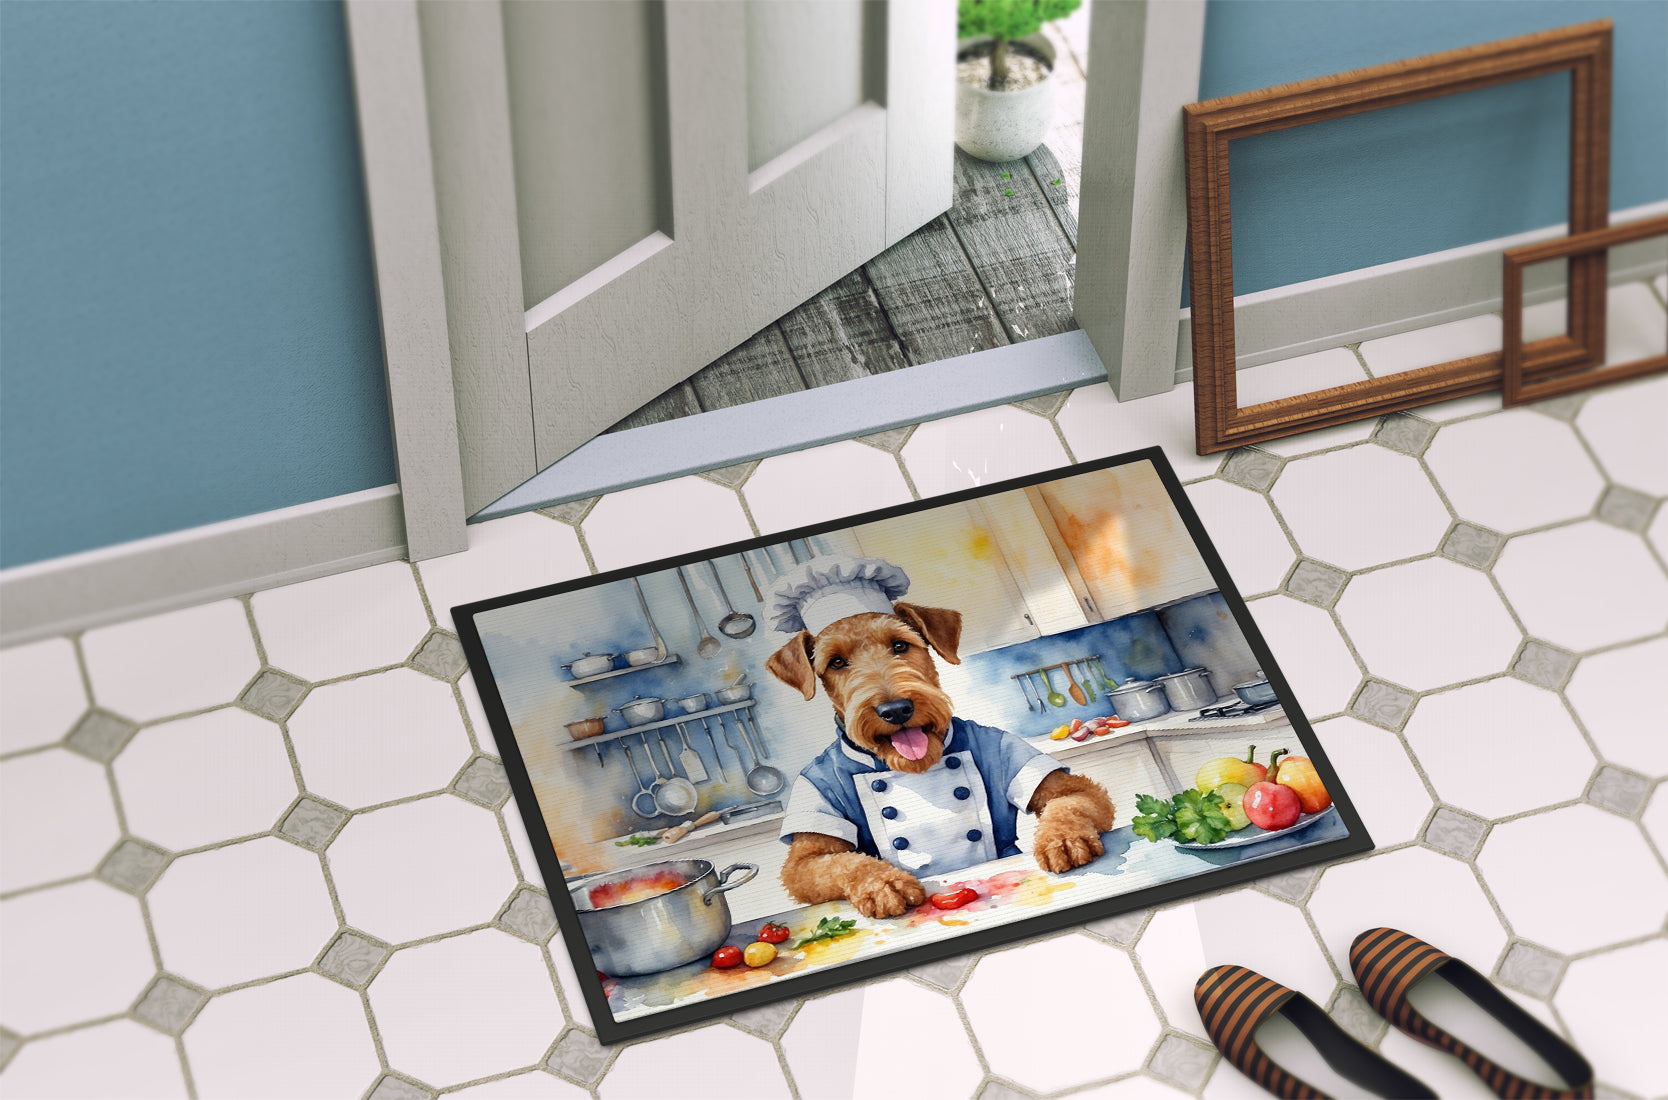 Airedale Terrier The Chef Doormat